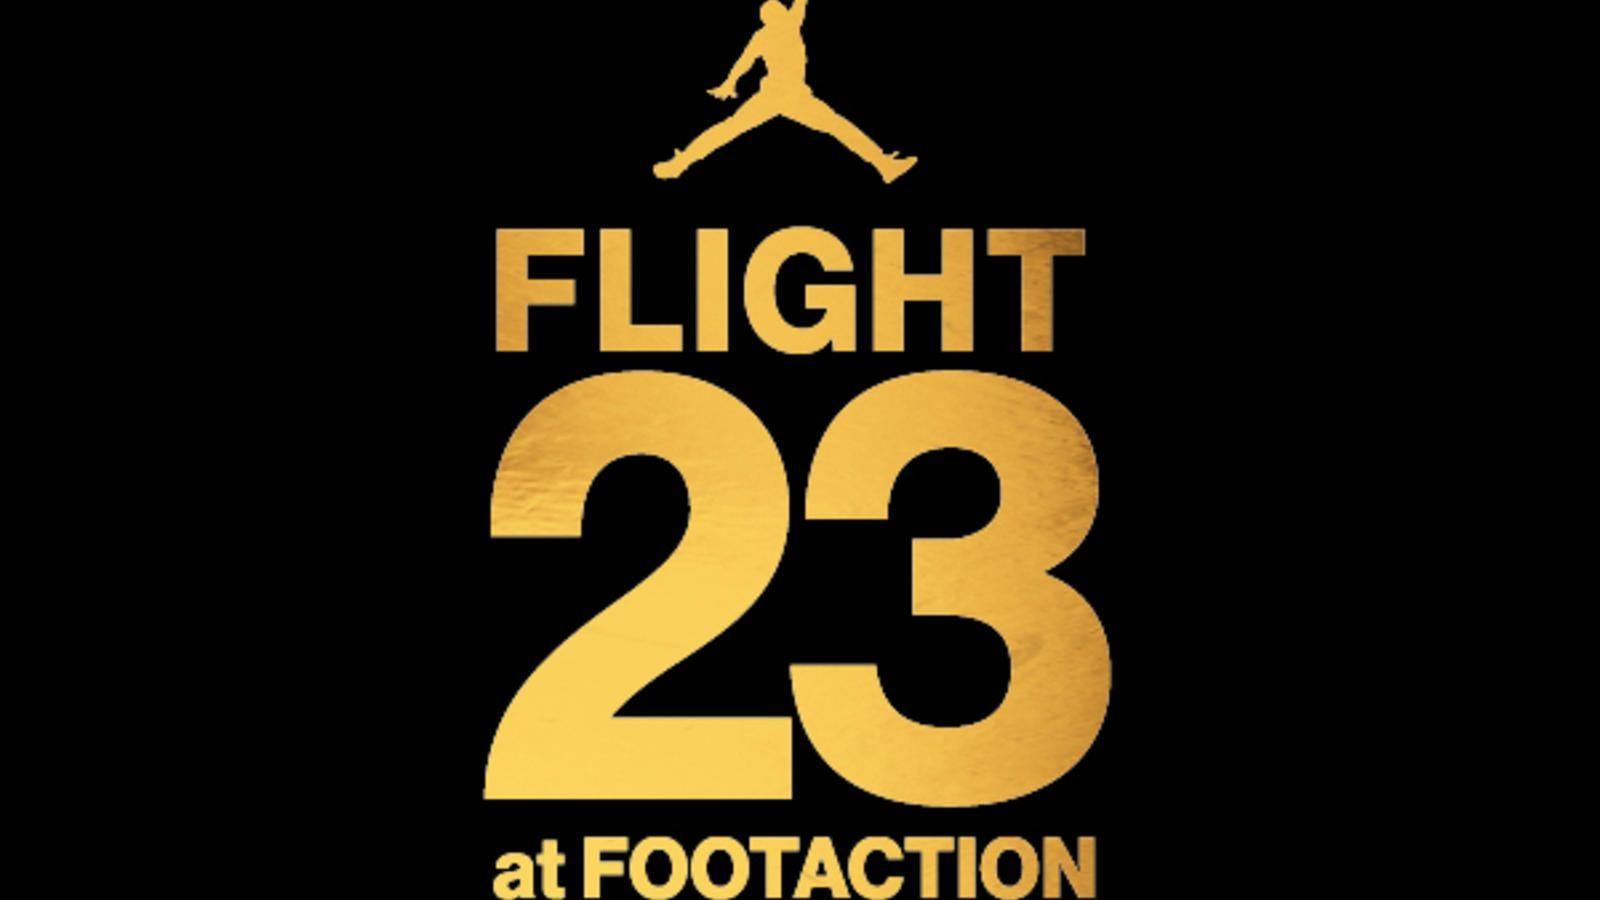 Jordan 23 Logo - Flight 23 at Footaction to be First North America Jordan-only retail ...